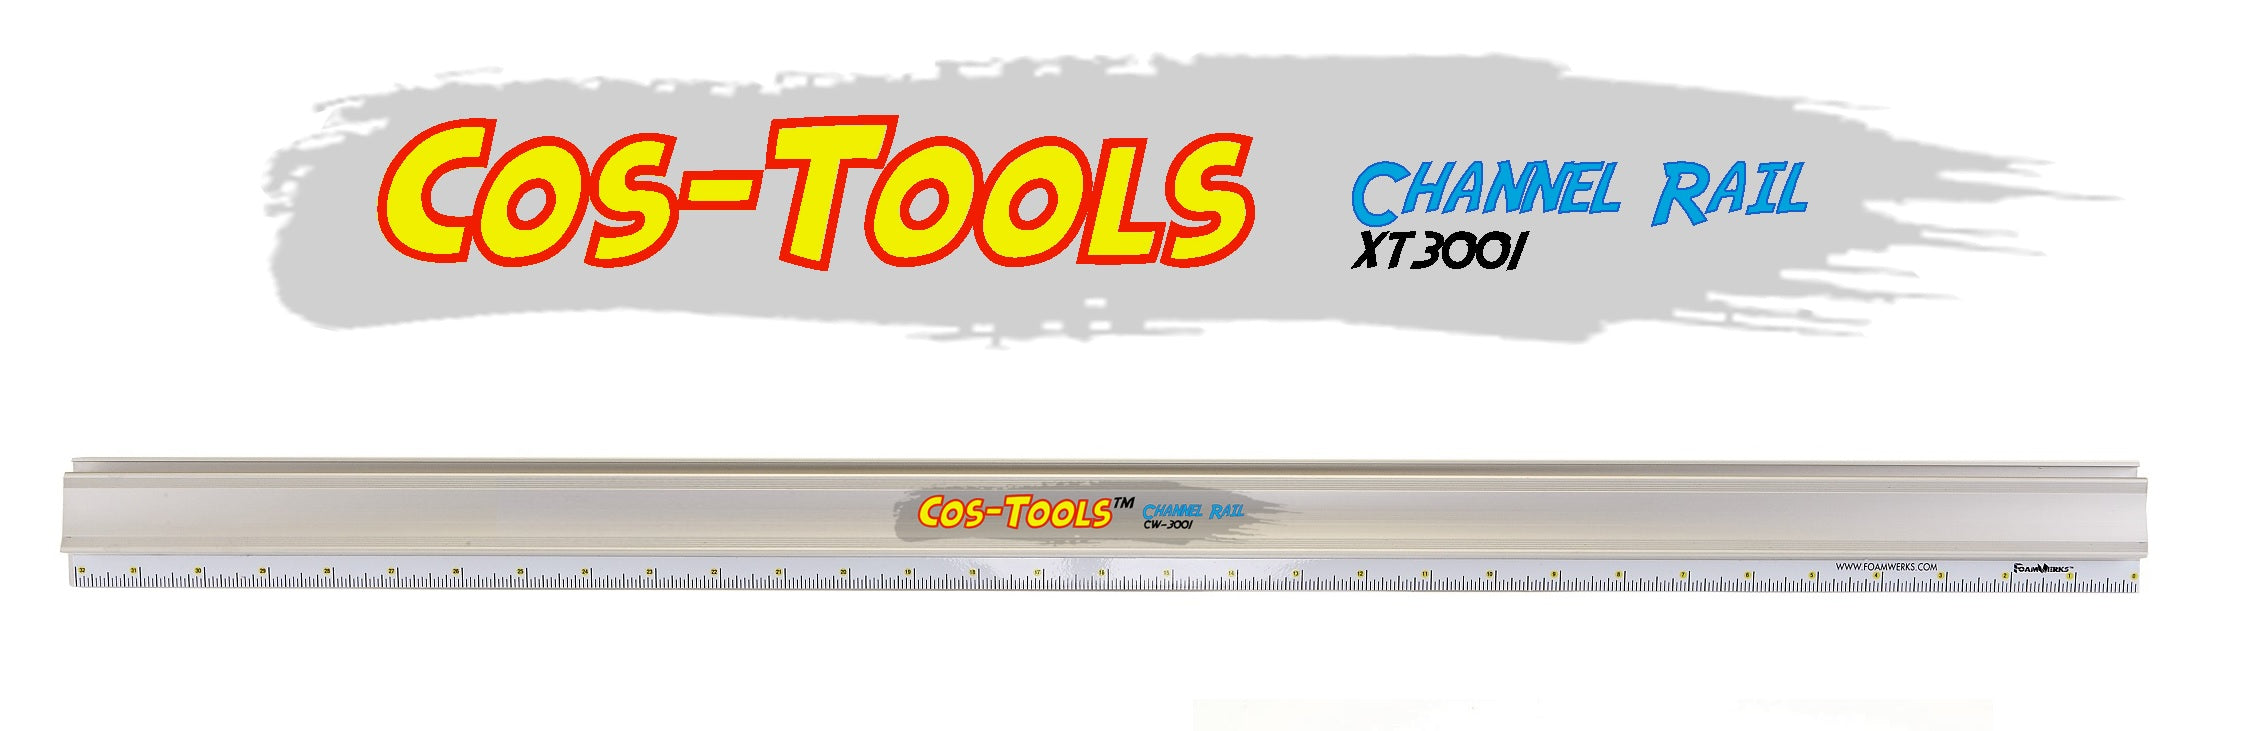 COS-Tools Channel Rail 32 inch (XT-3001)